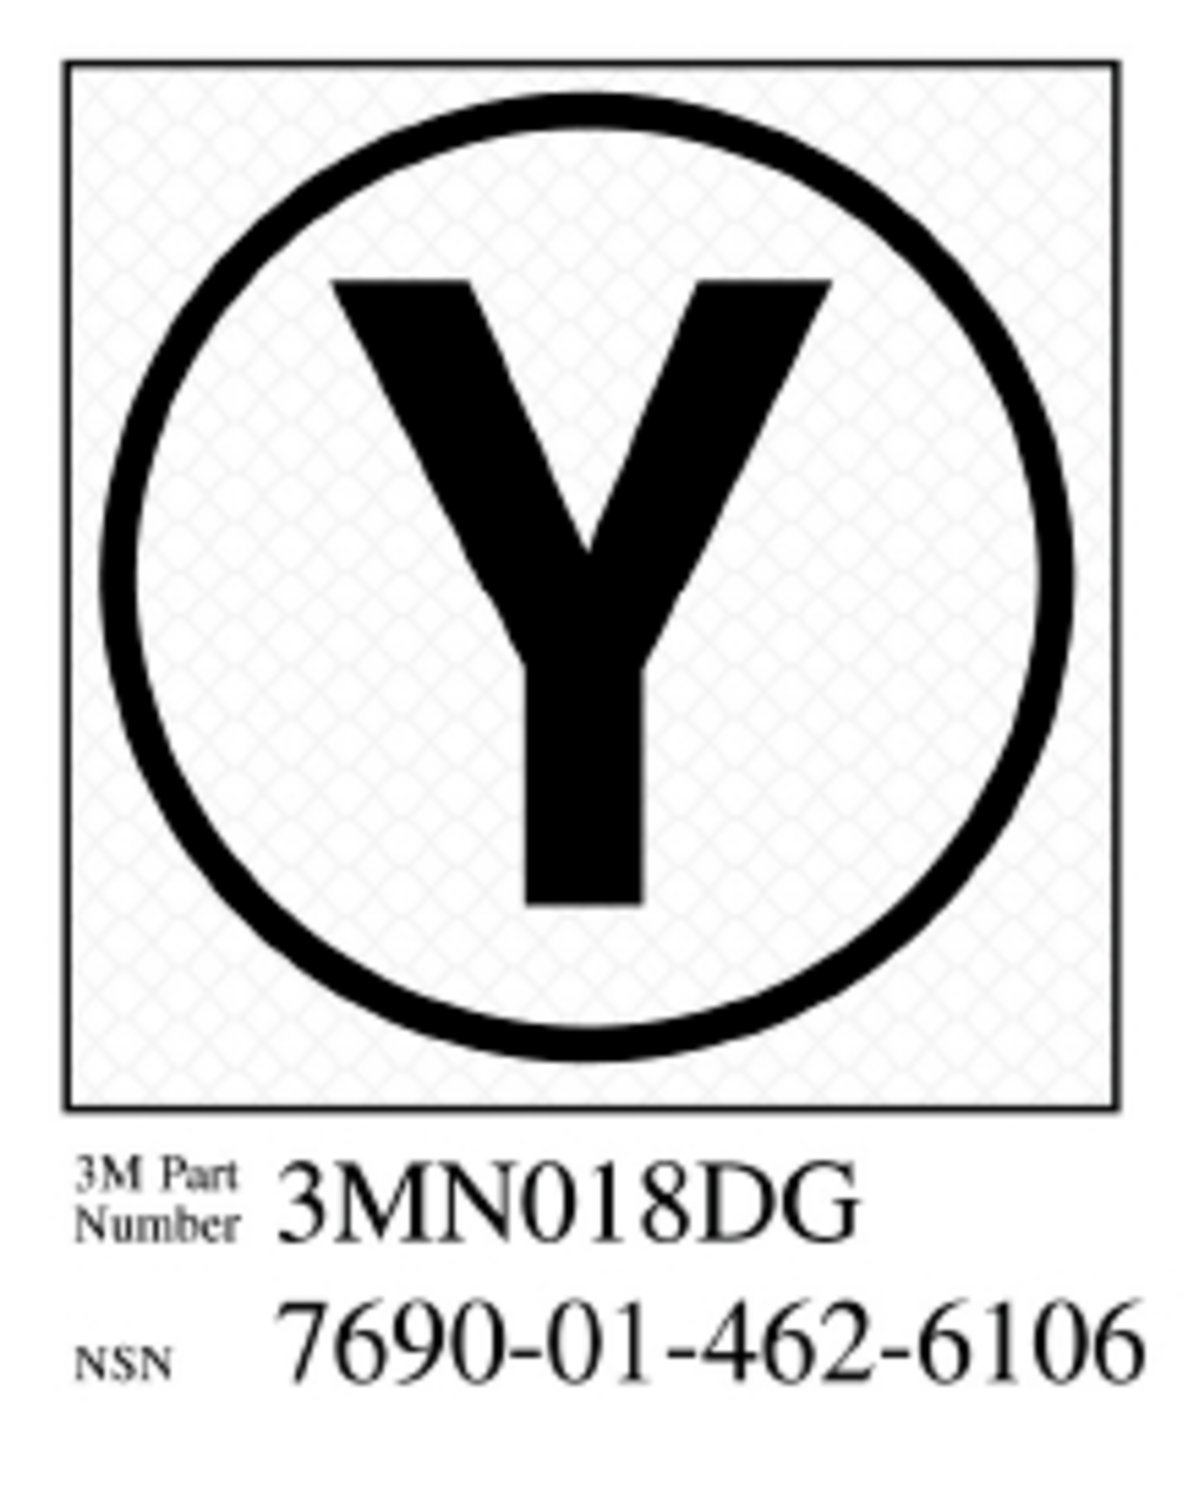 7010388572 - 3M Diamond Grade Damage Control Sign 3MN018DG, "Cir Yoke", 2 in x 2
in, 10/Package